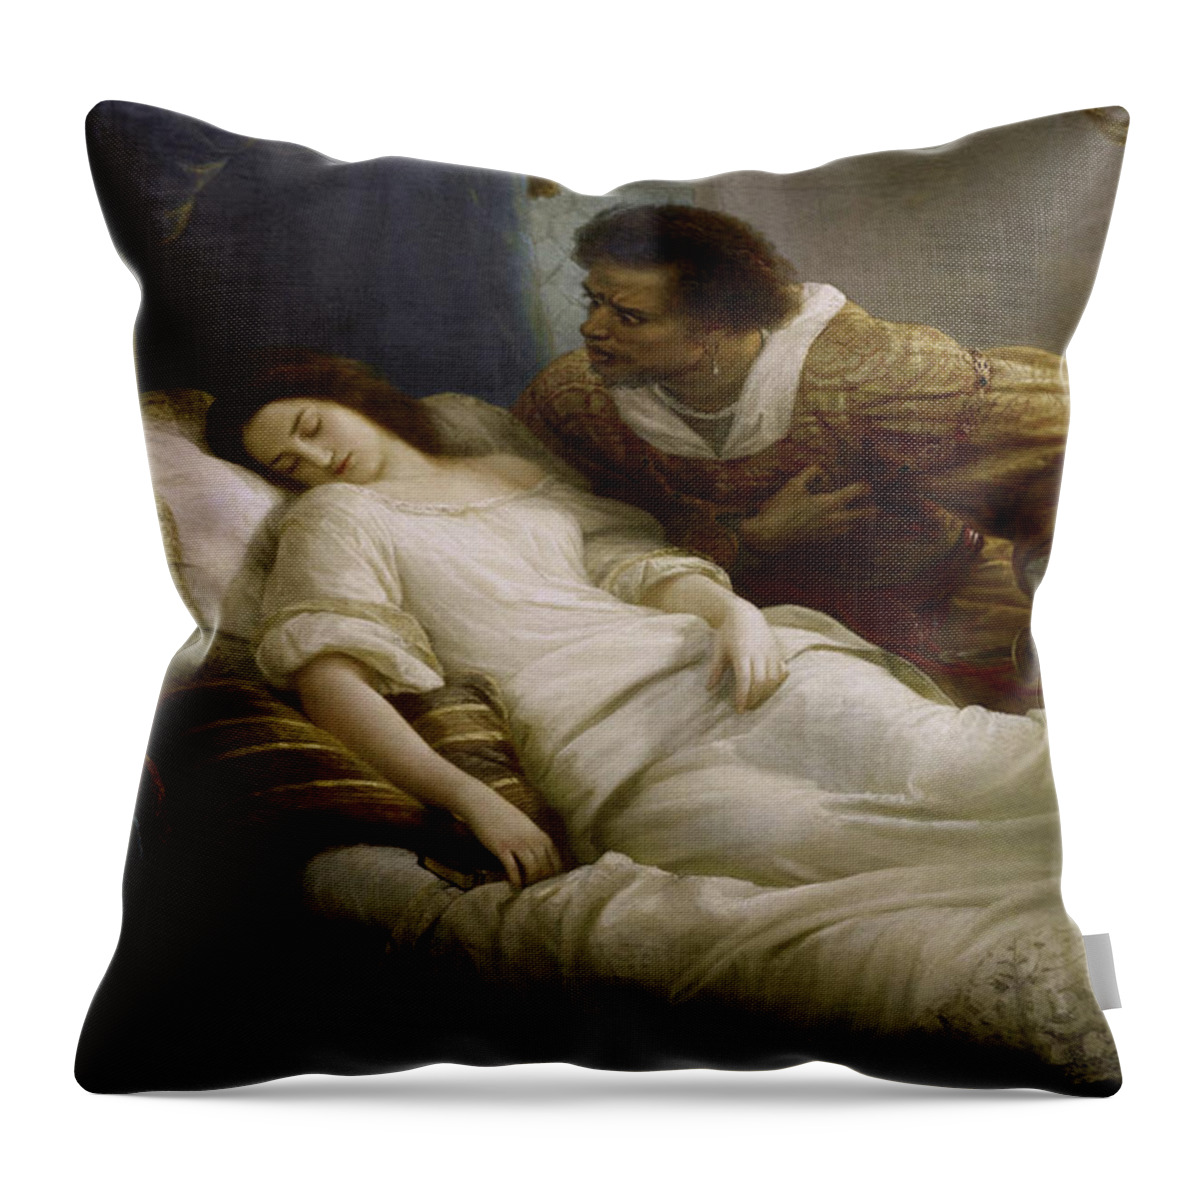 Othello Throw Pillow featuring the painting Othello by Christian Kohler by Rolando Burbon